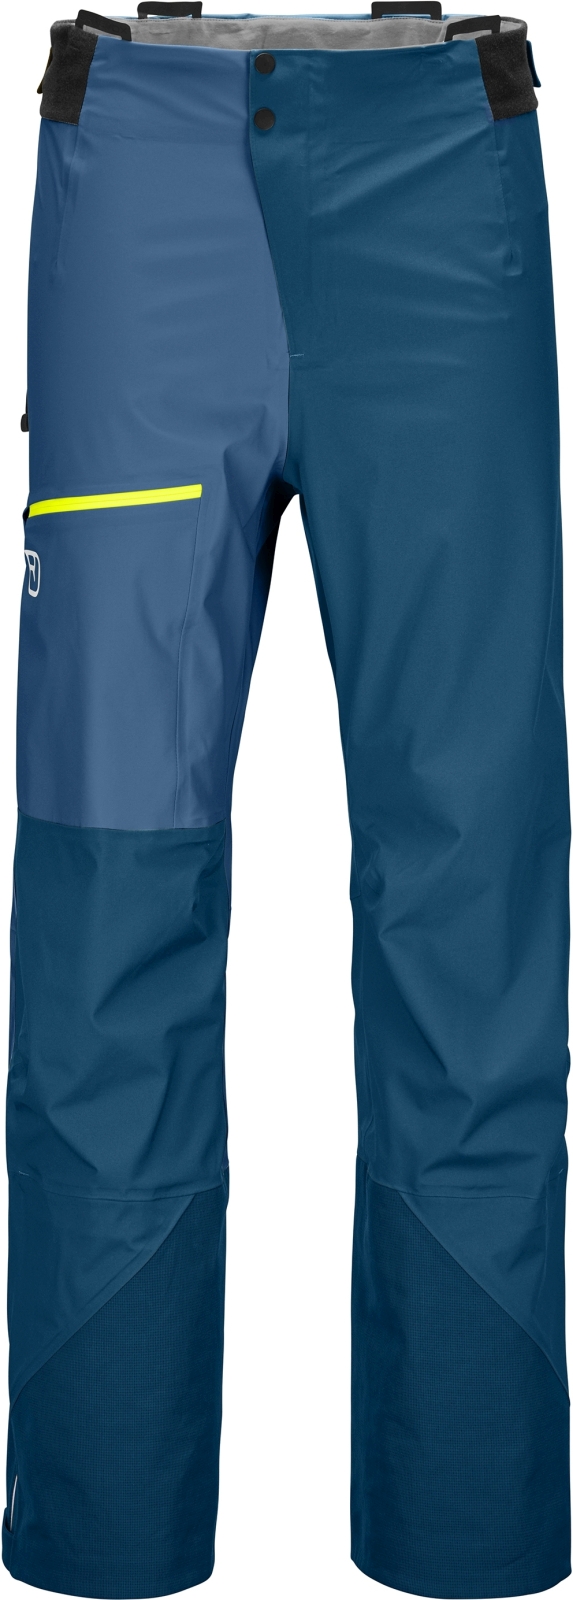 E-shop Ortovox 3l ortler pants m - petrol blue L